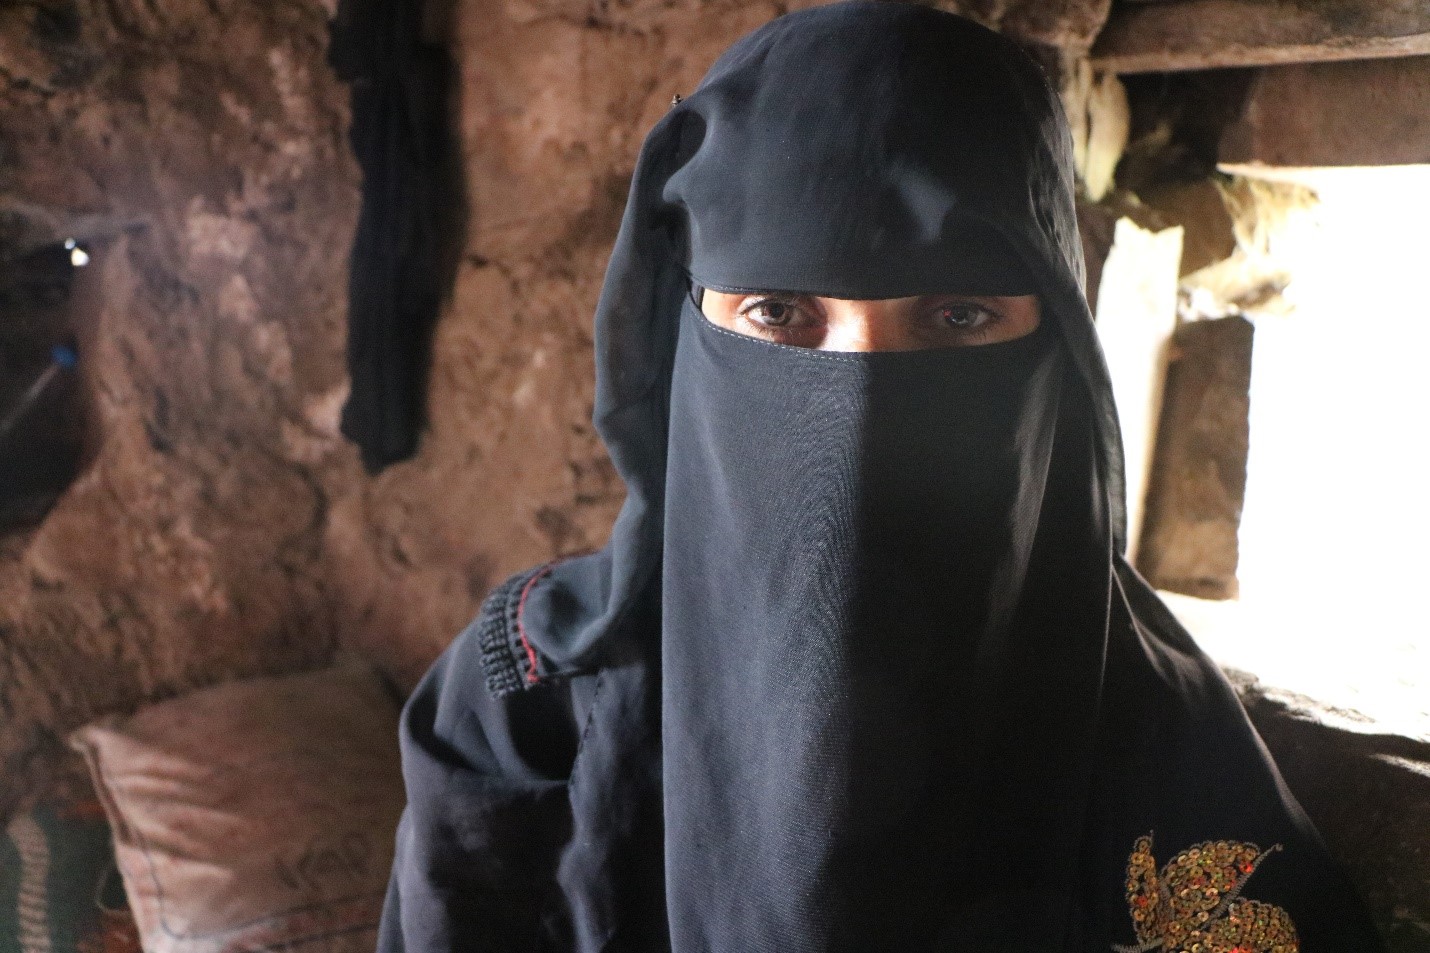 A woman wearing a black burqa